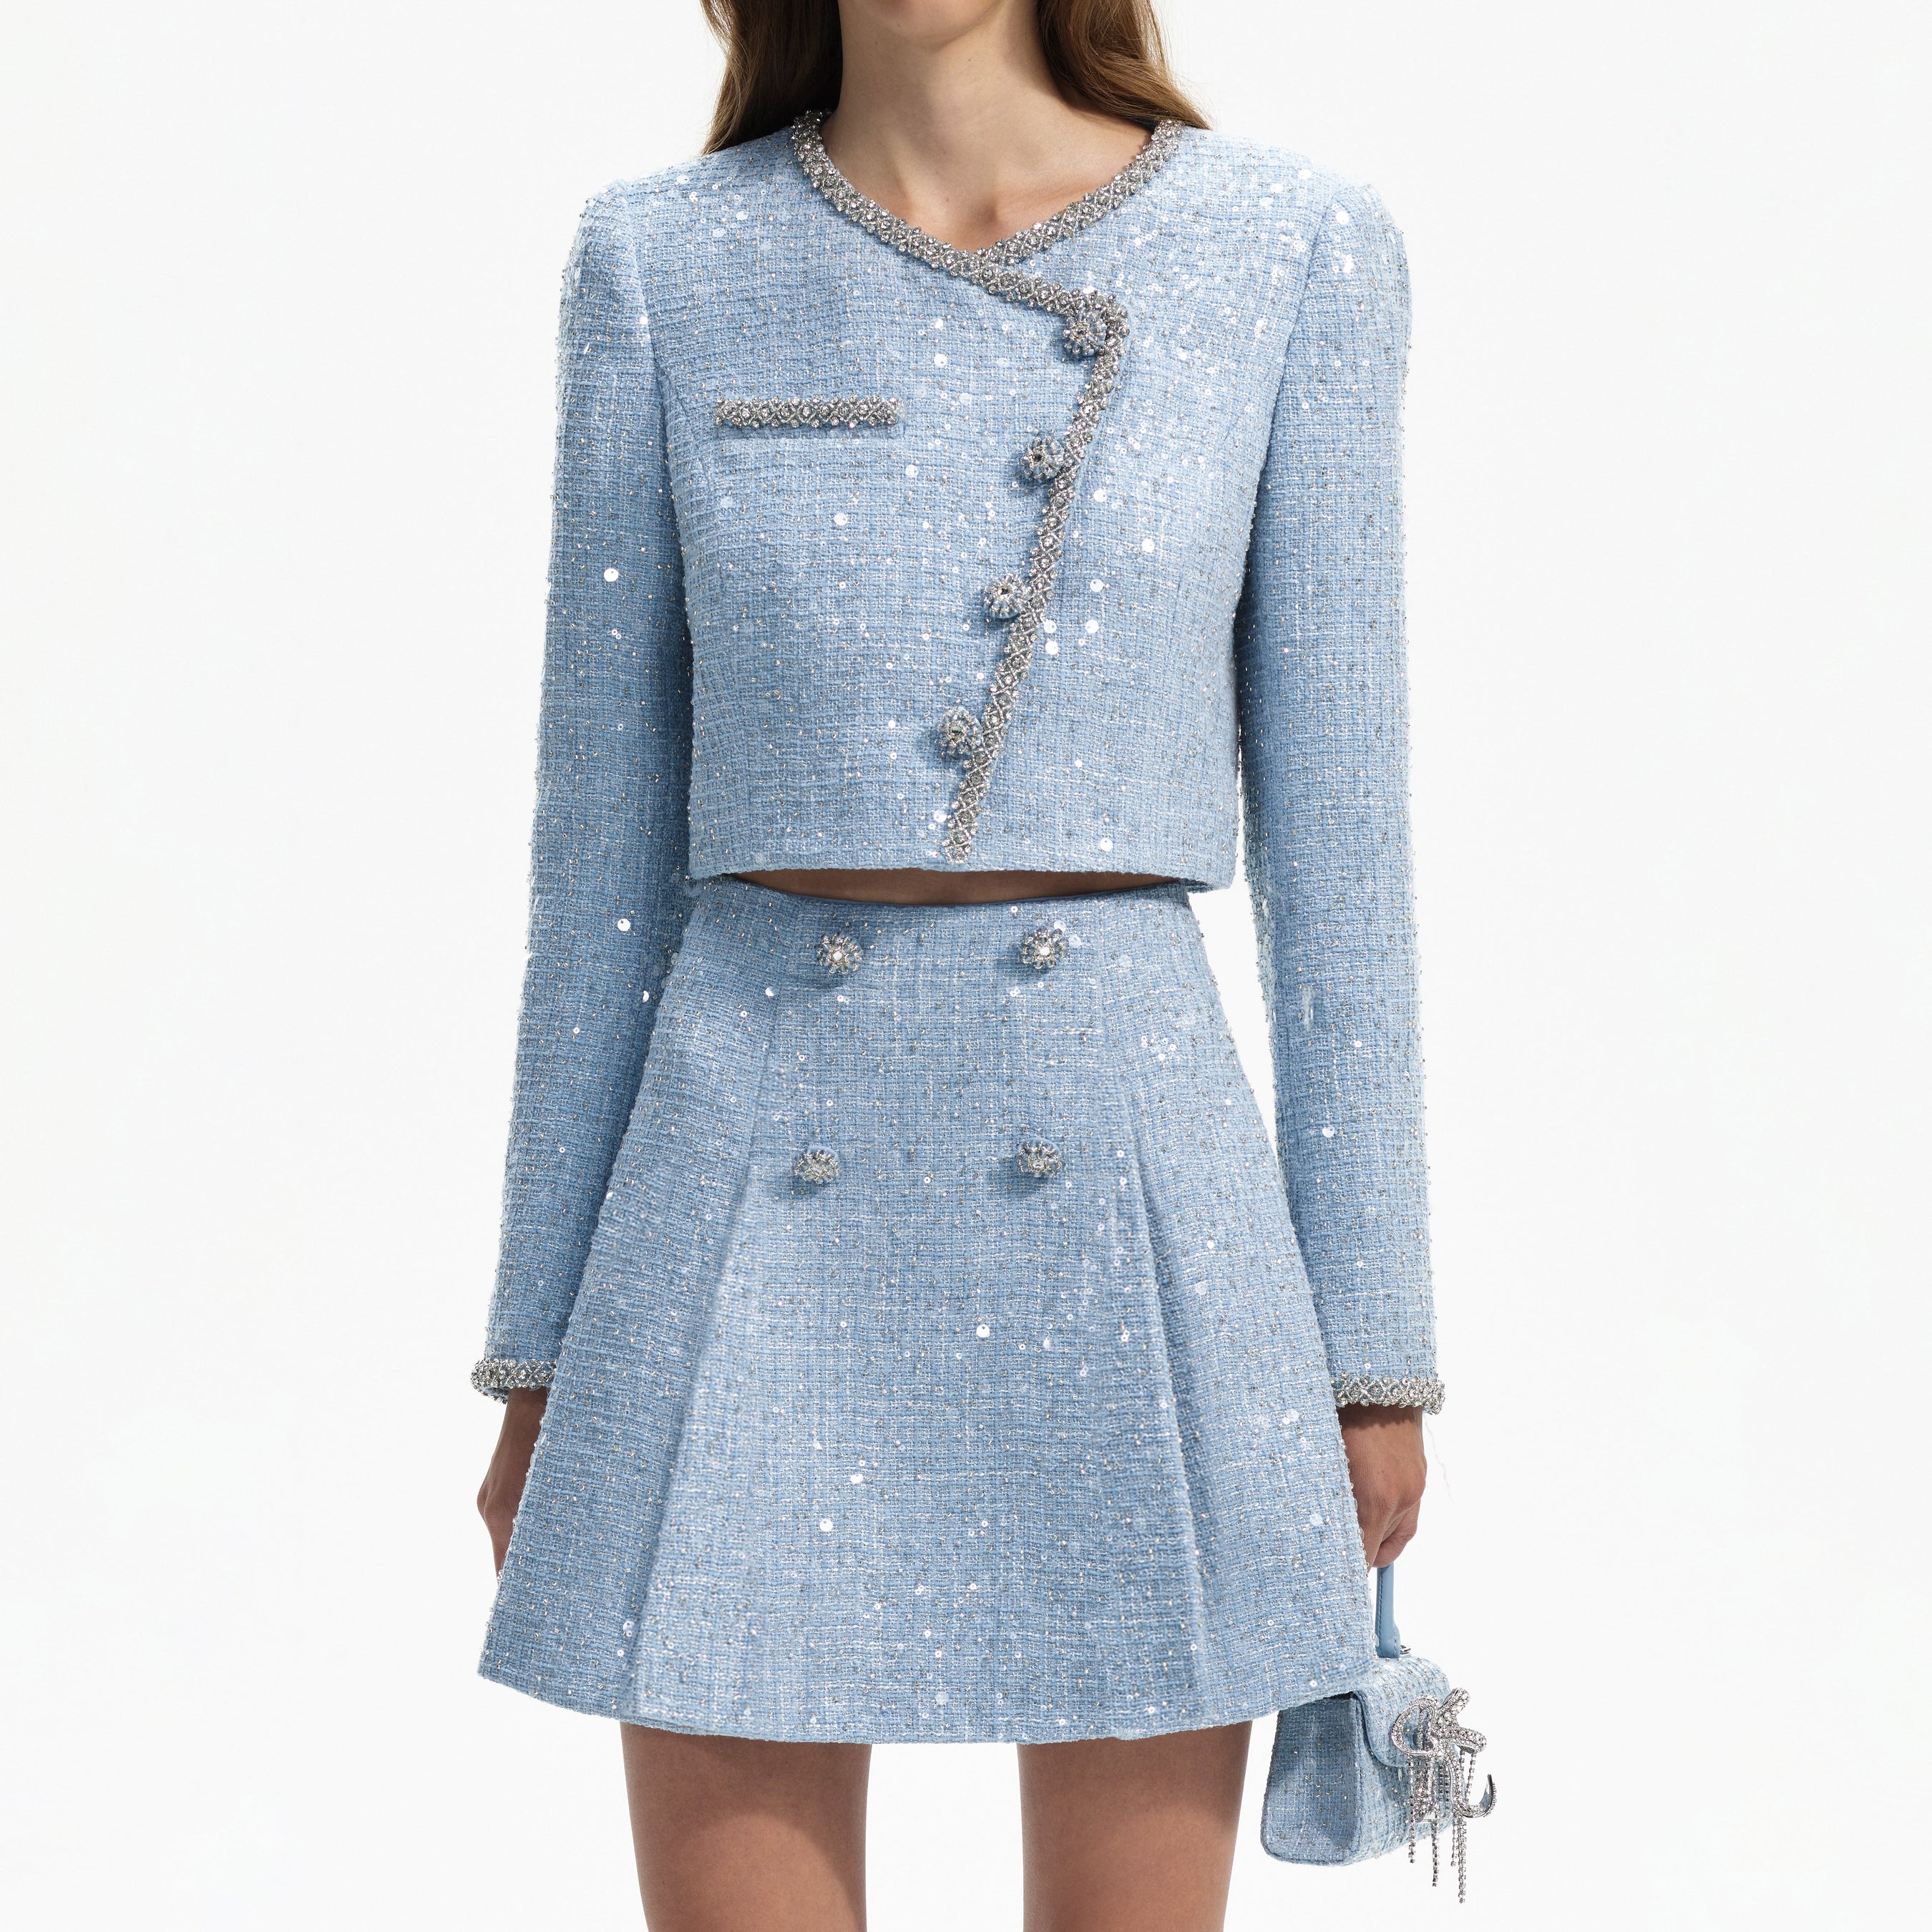 Blue Sequin Boucle Mini Skirt